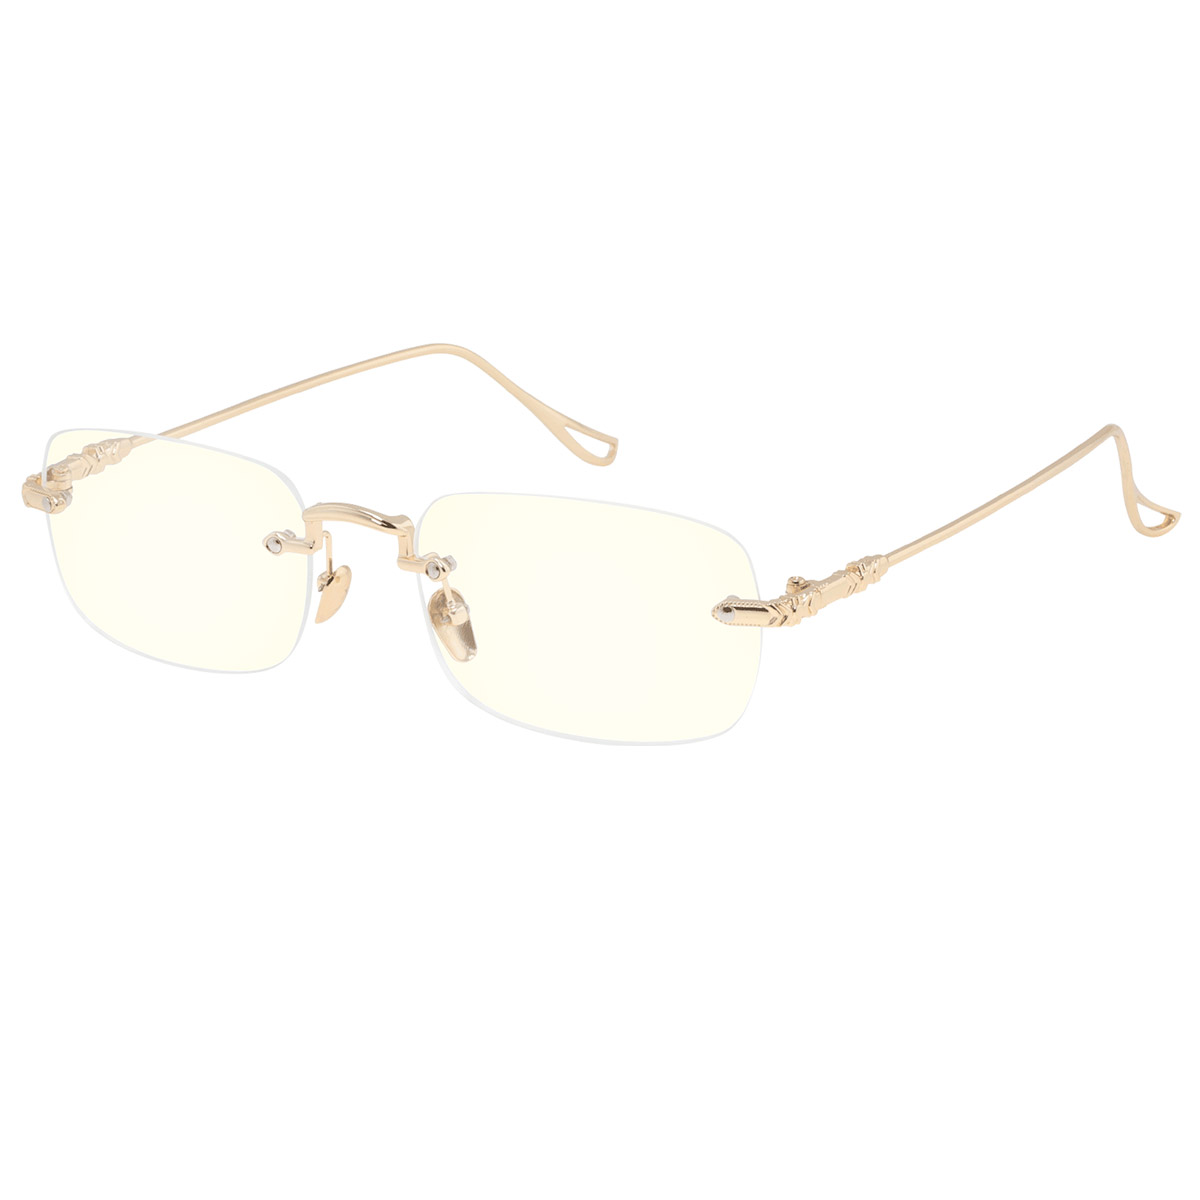 Winslow - Oval Gold Reading Glasses for Men